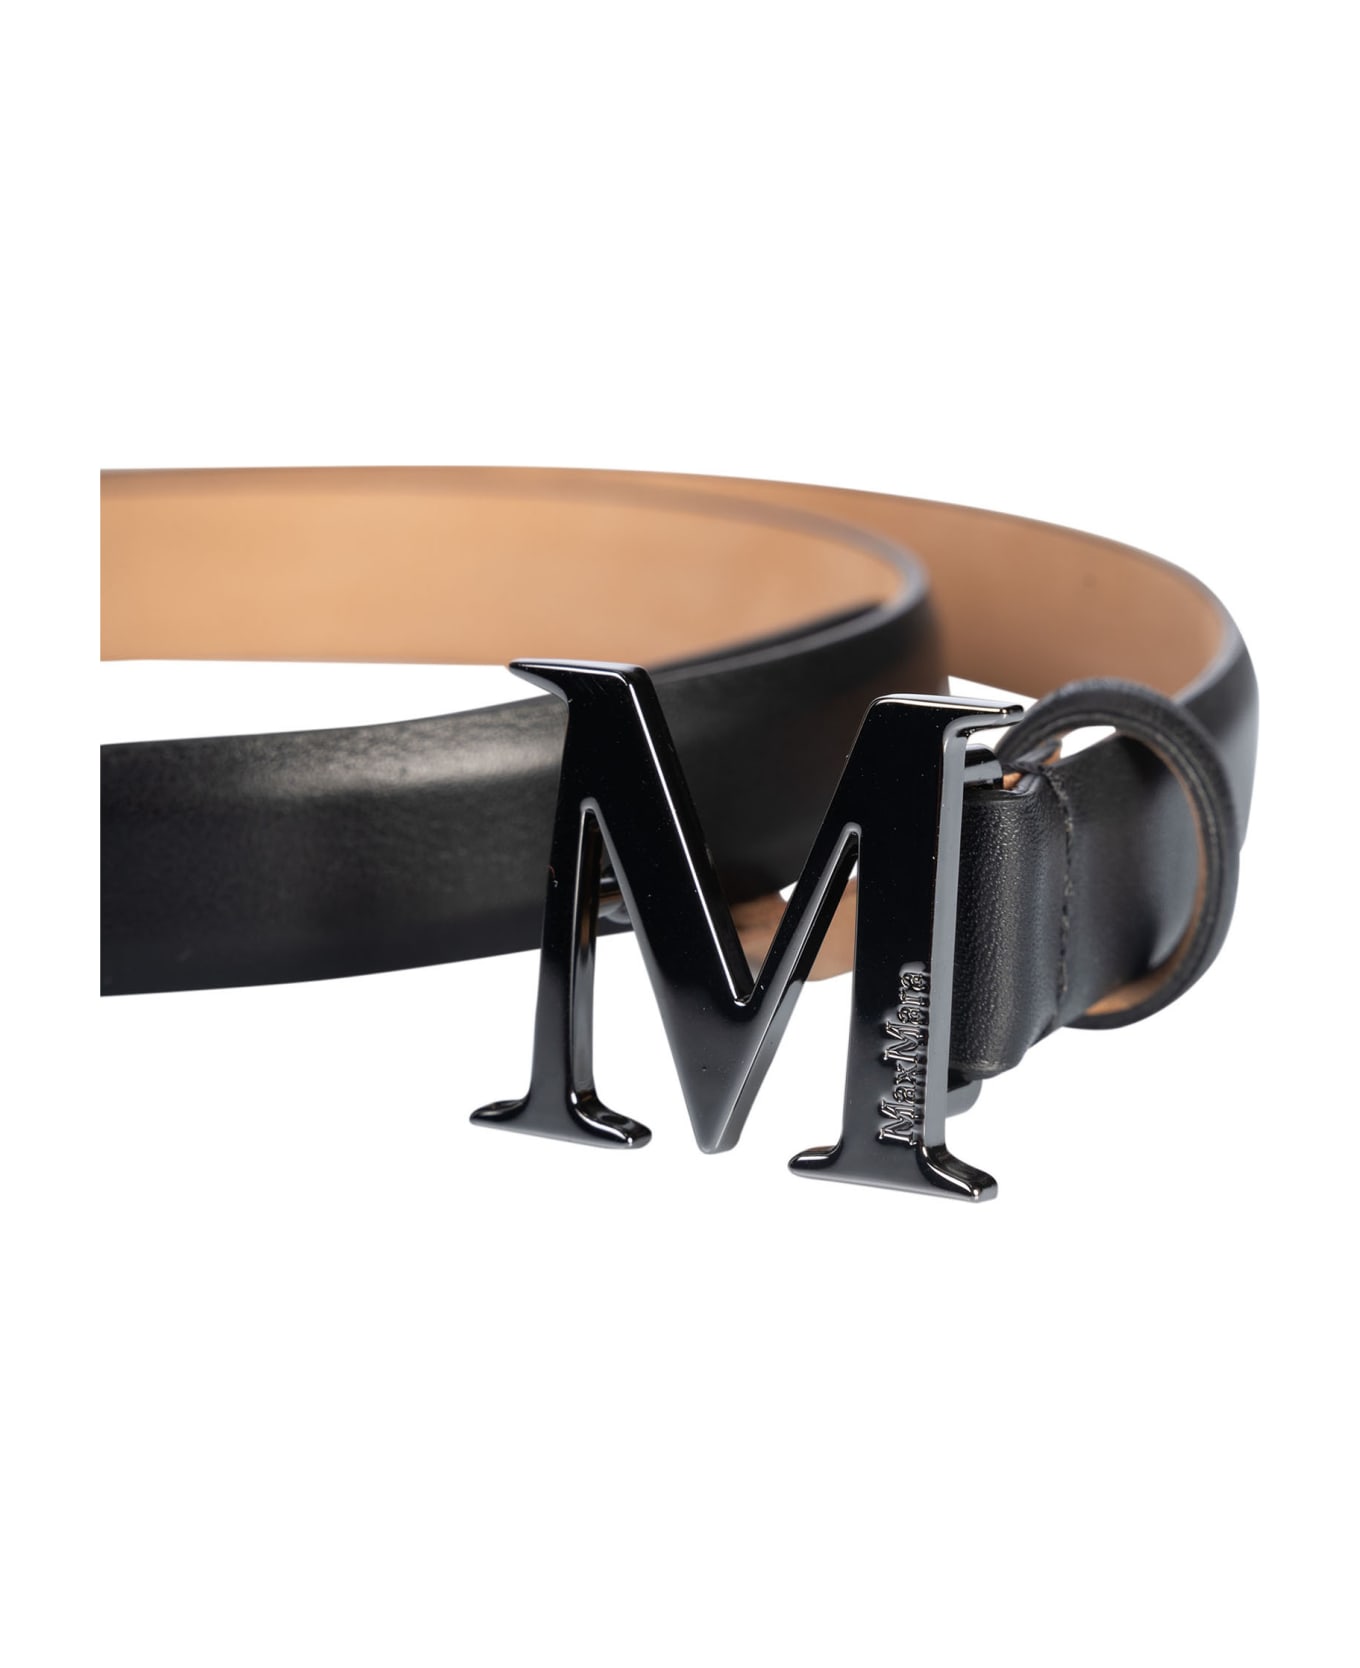 Max Mara Mclassic20 Belt - C